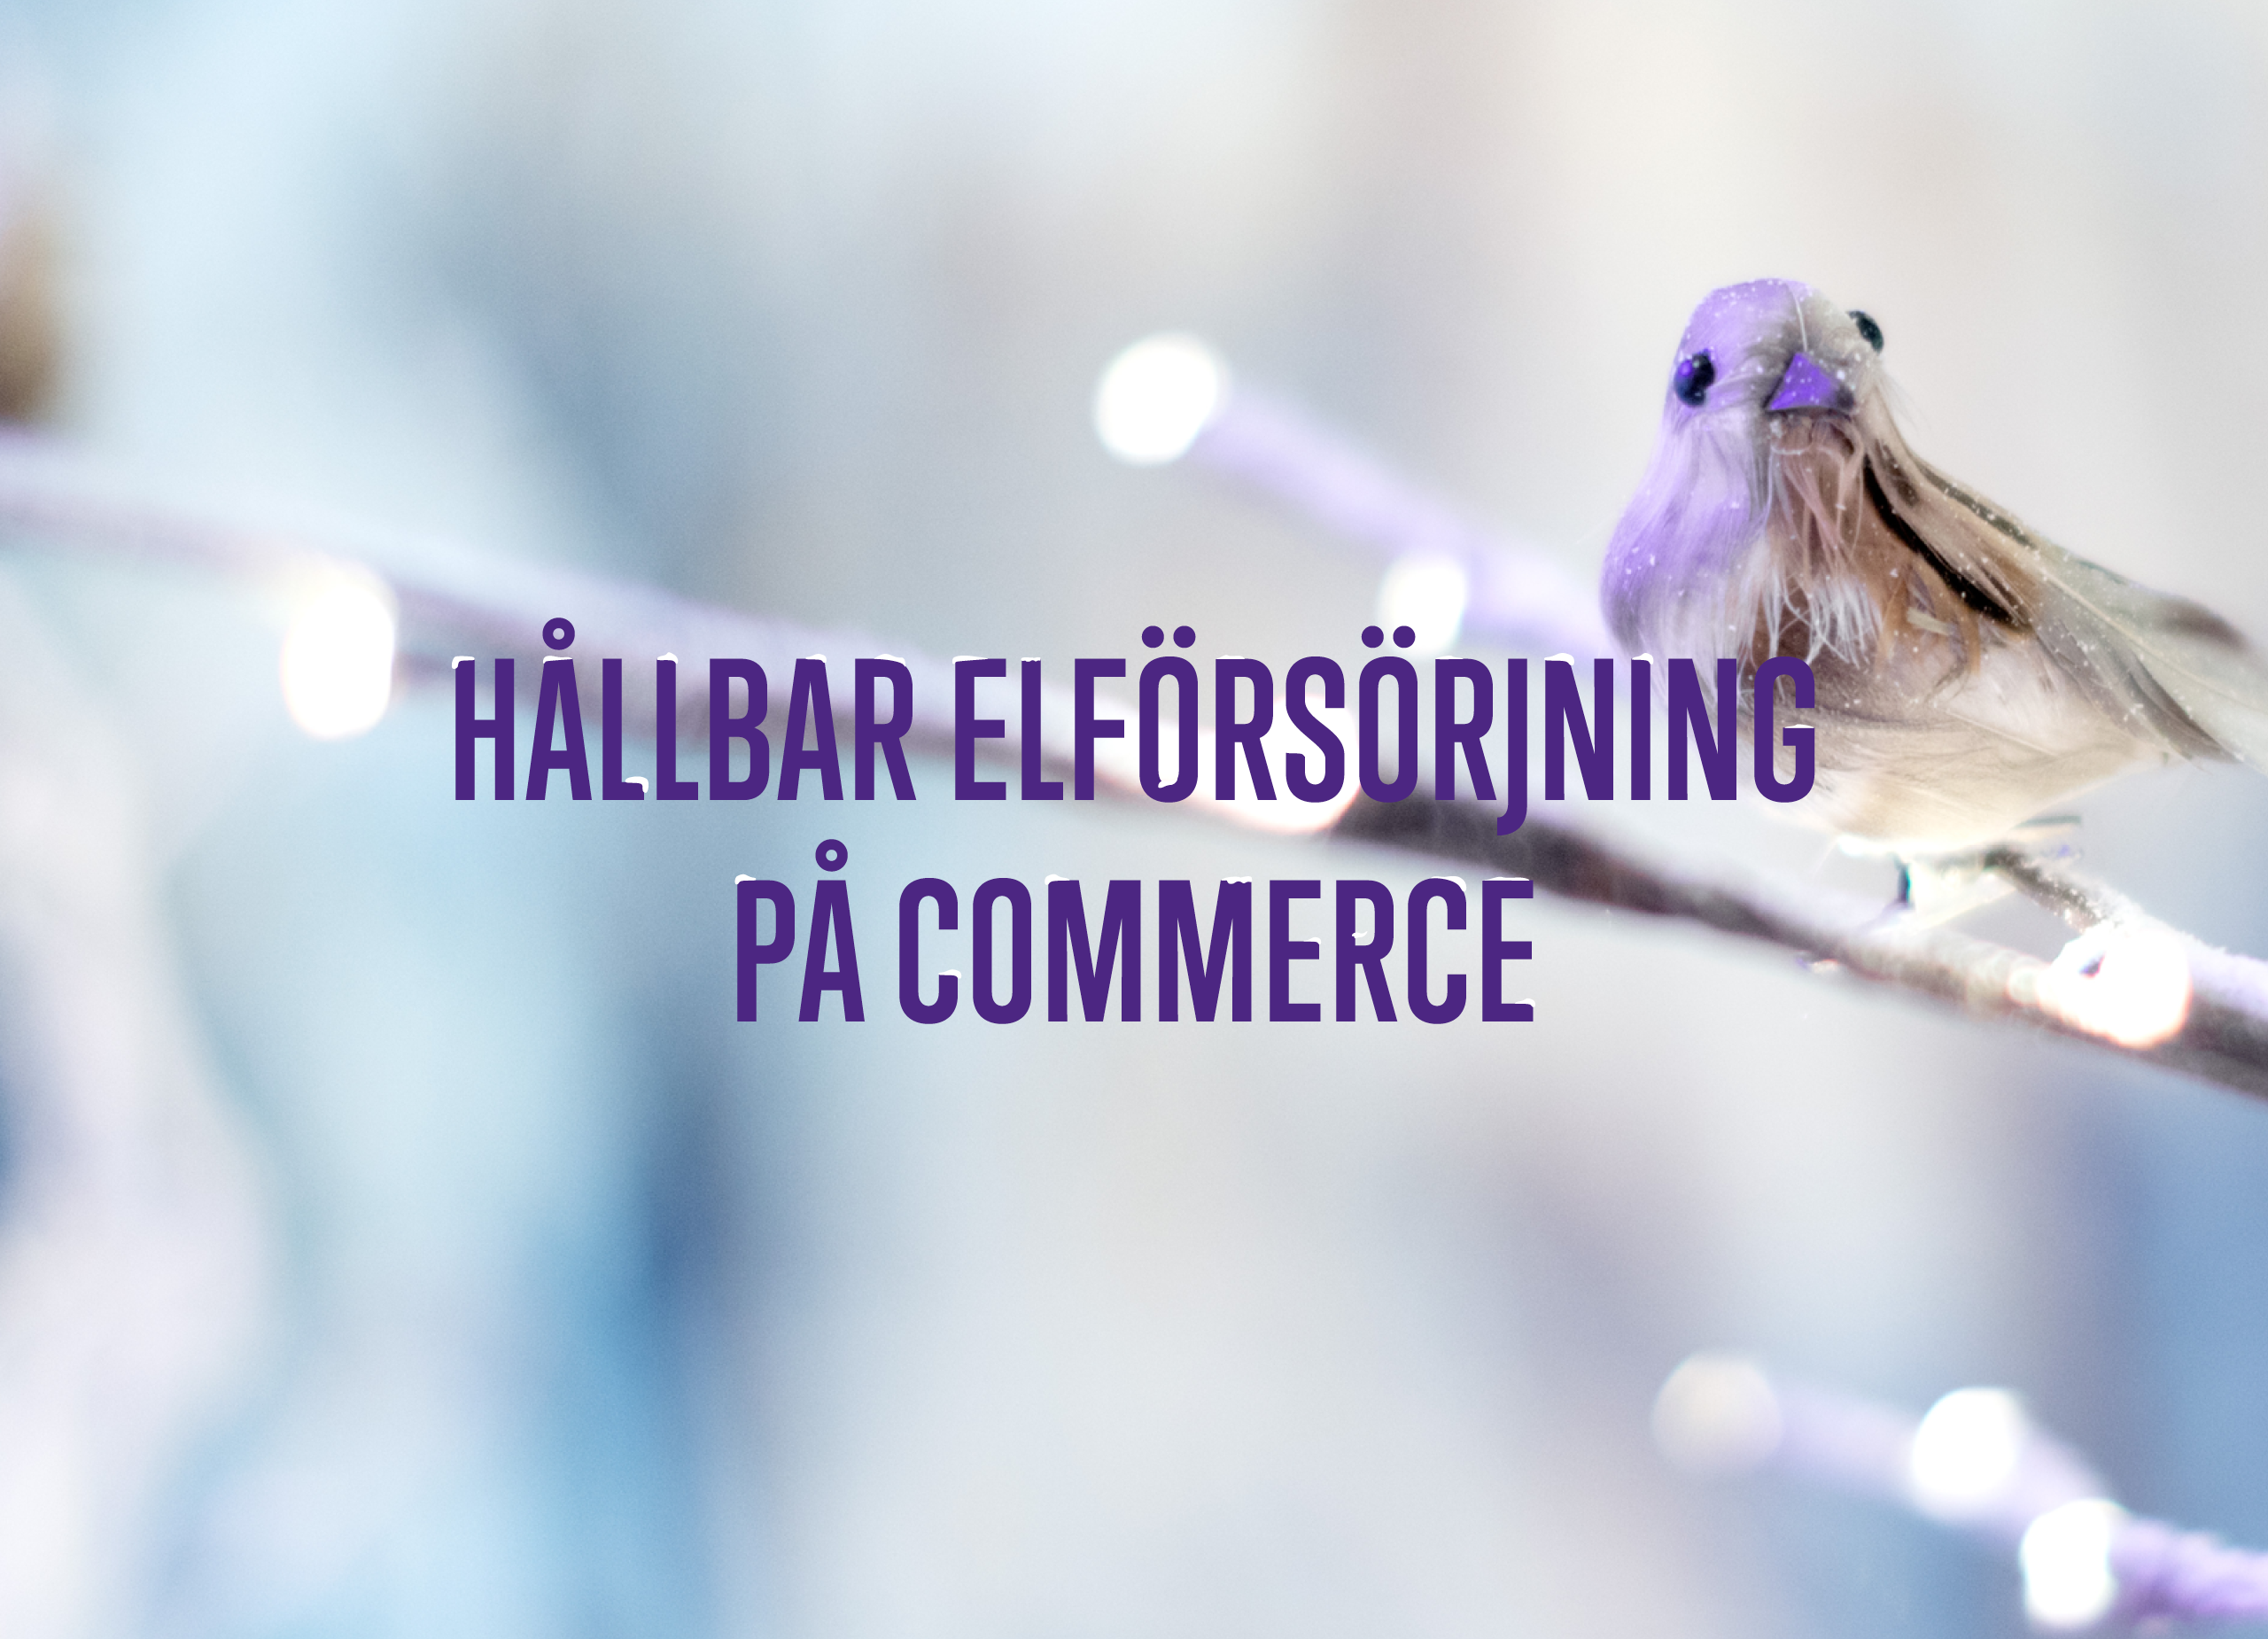 hallbar-elforsorjning-pa-commerce-img